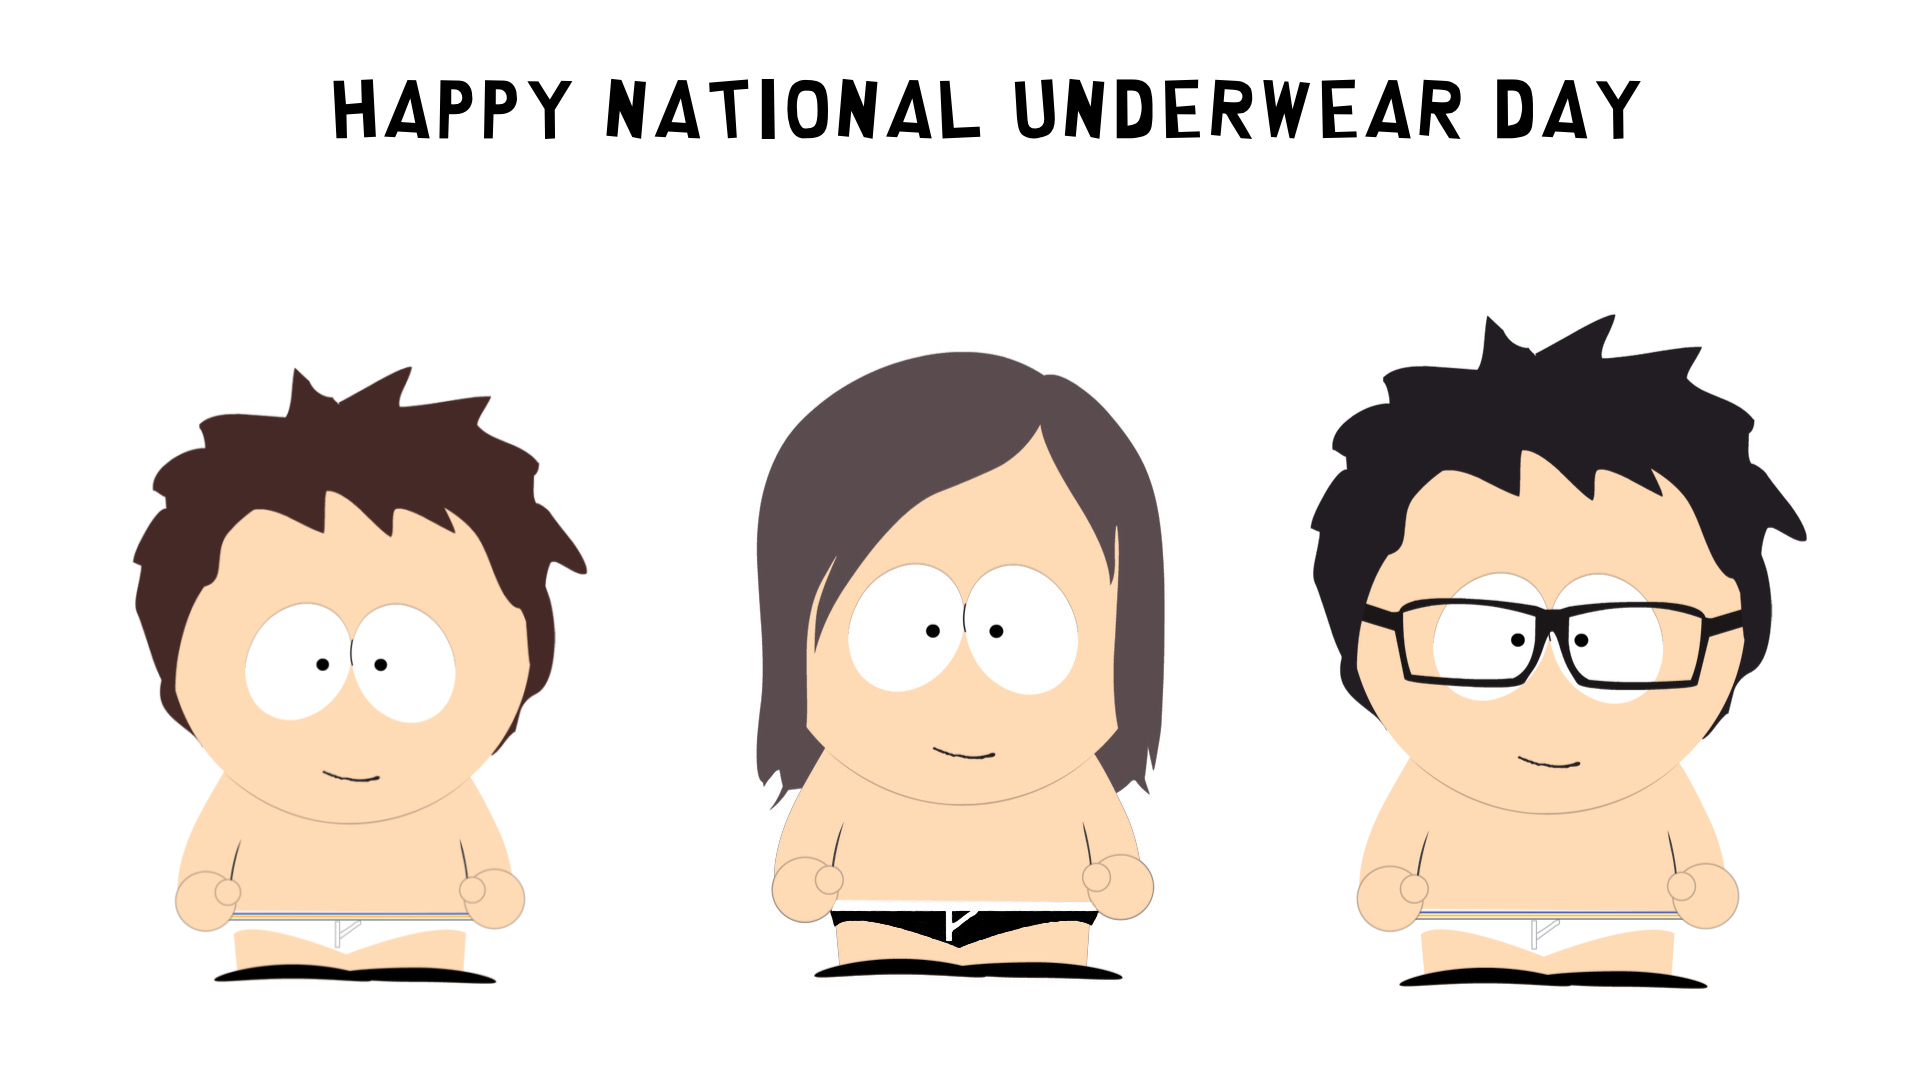 Happy National Underwear Day by TheSimpsonsFan2002 on DeviantArt